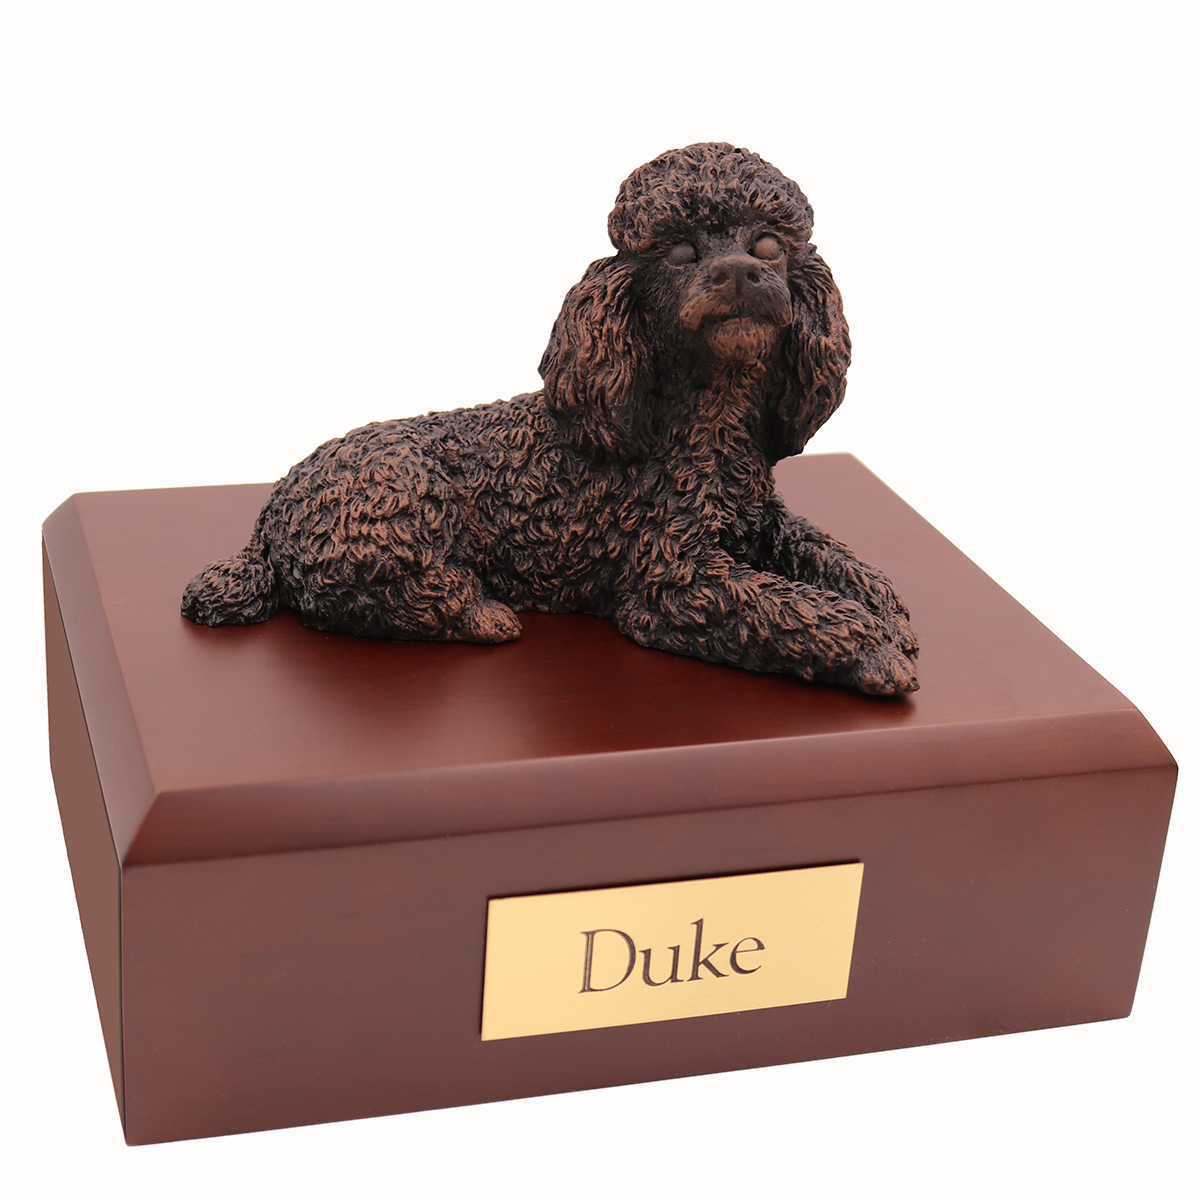 Dog, Poodle, Bronze - Figurine Urn